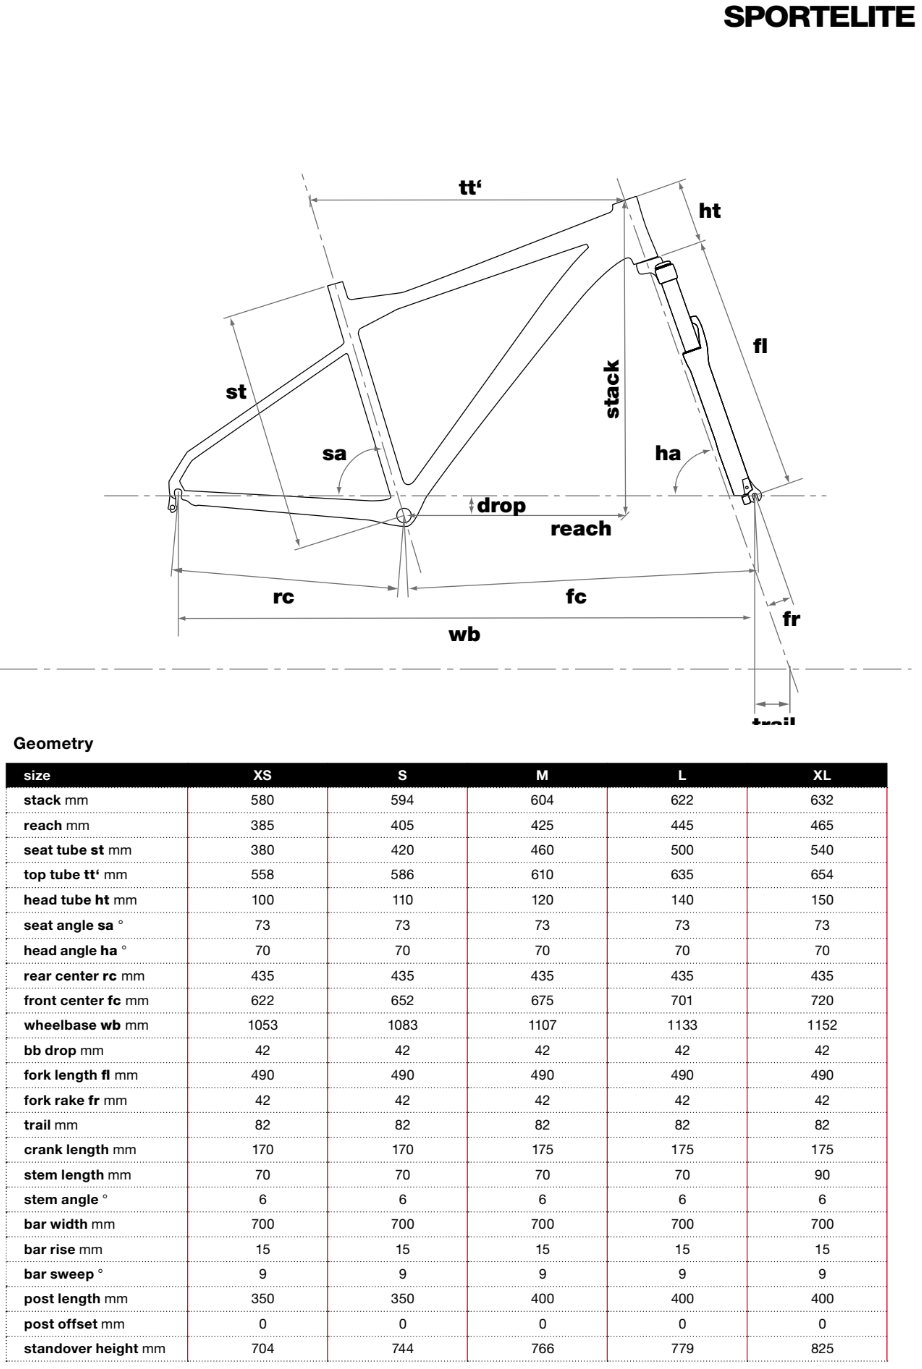 BMC Sportelite geometry chart